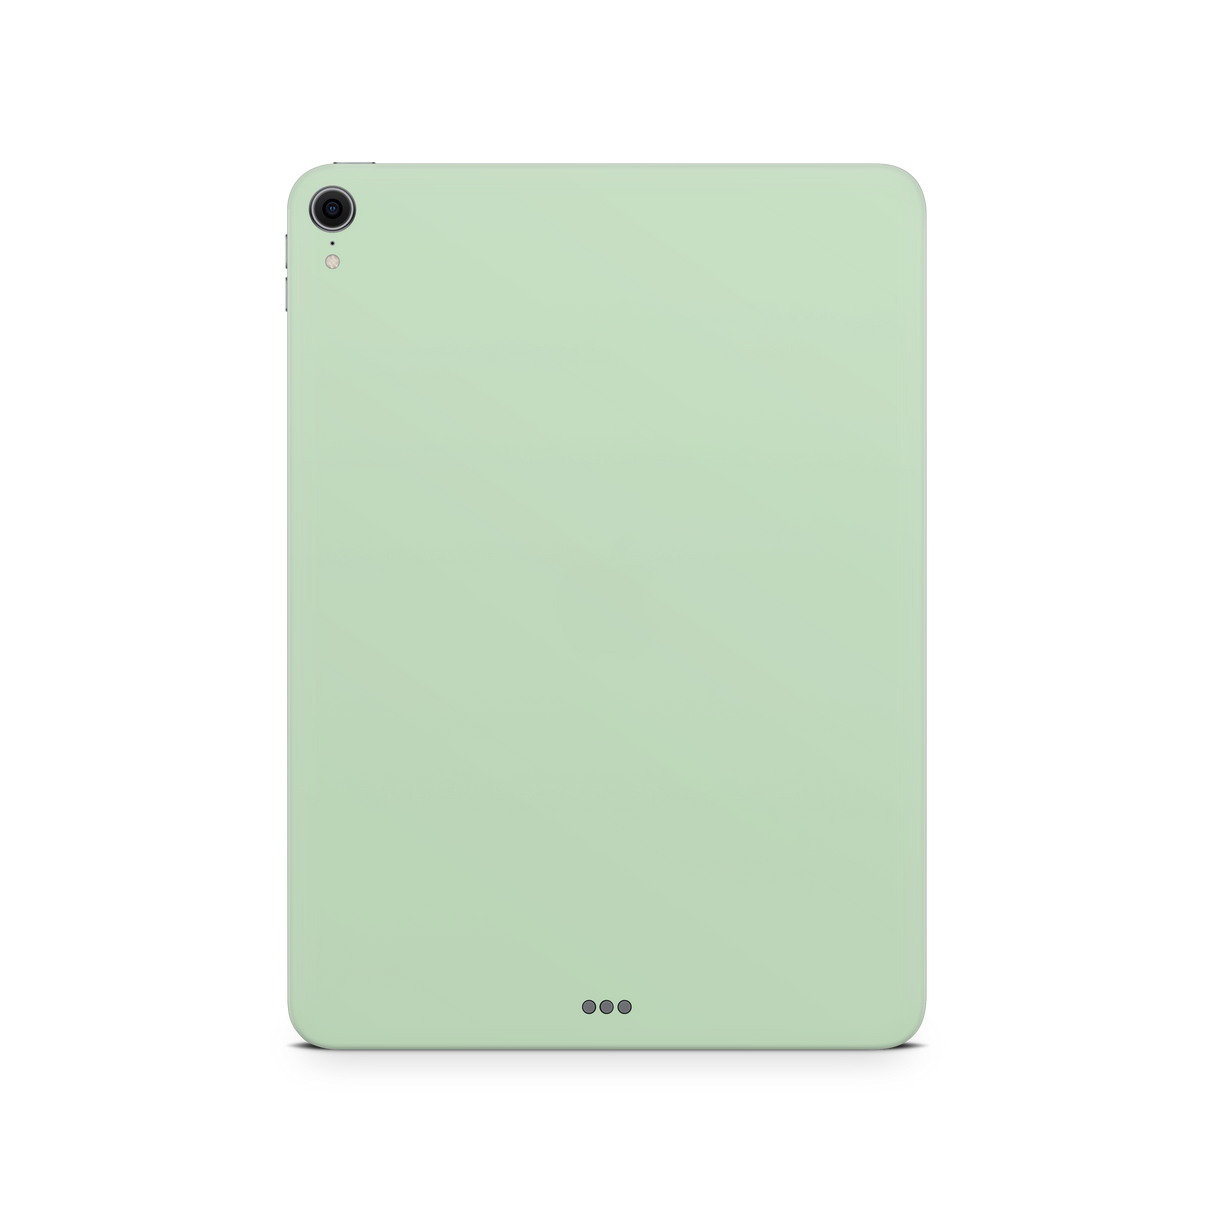 Apple iPad Pale Mint Skin